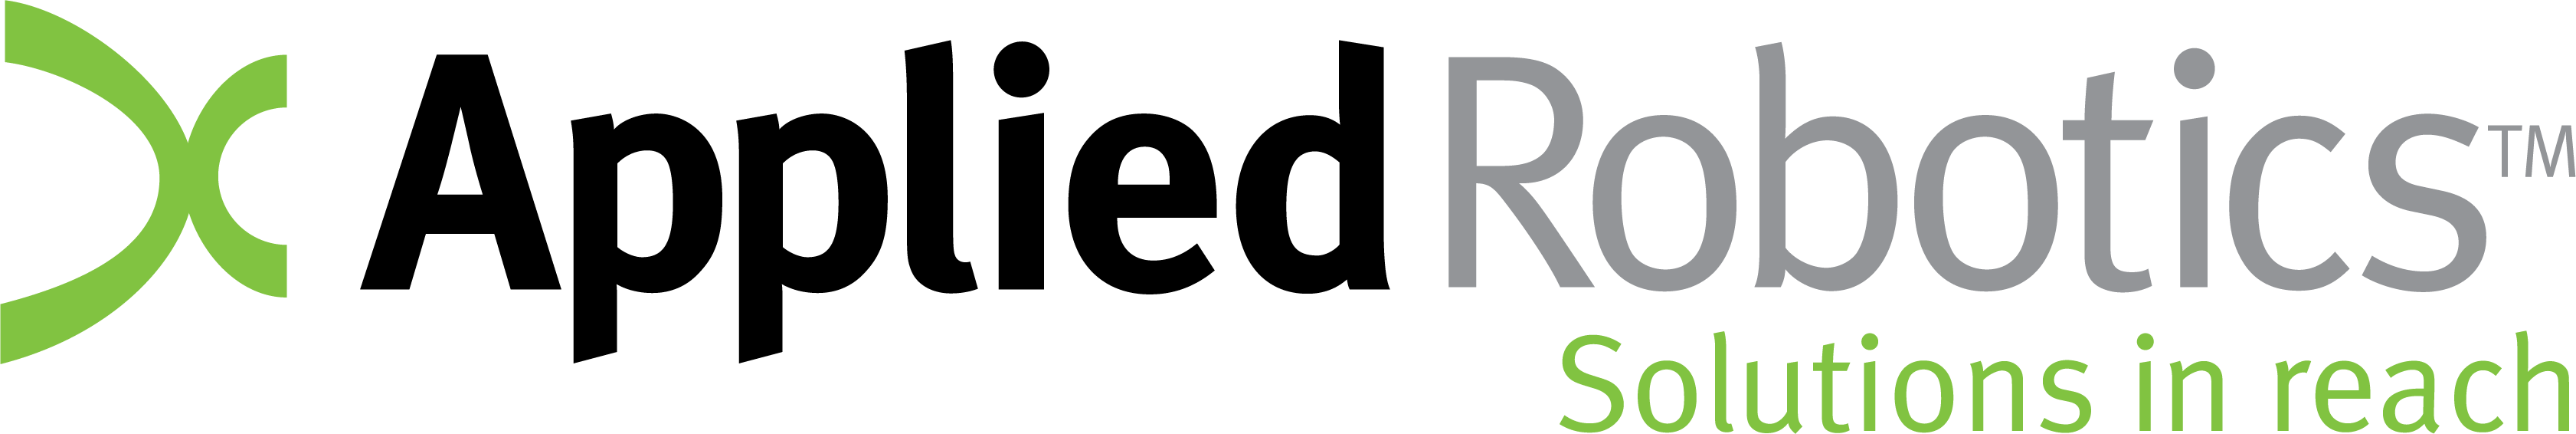 Applied Robotics logo